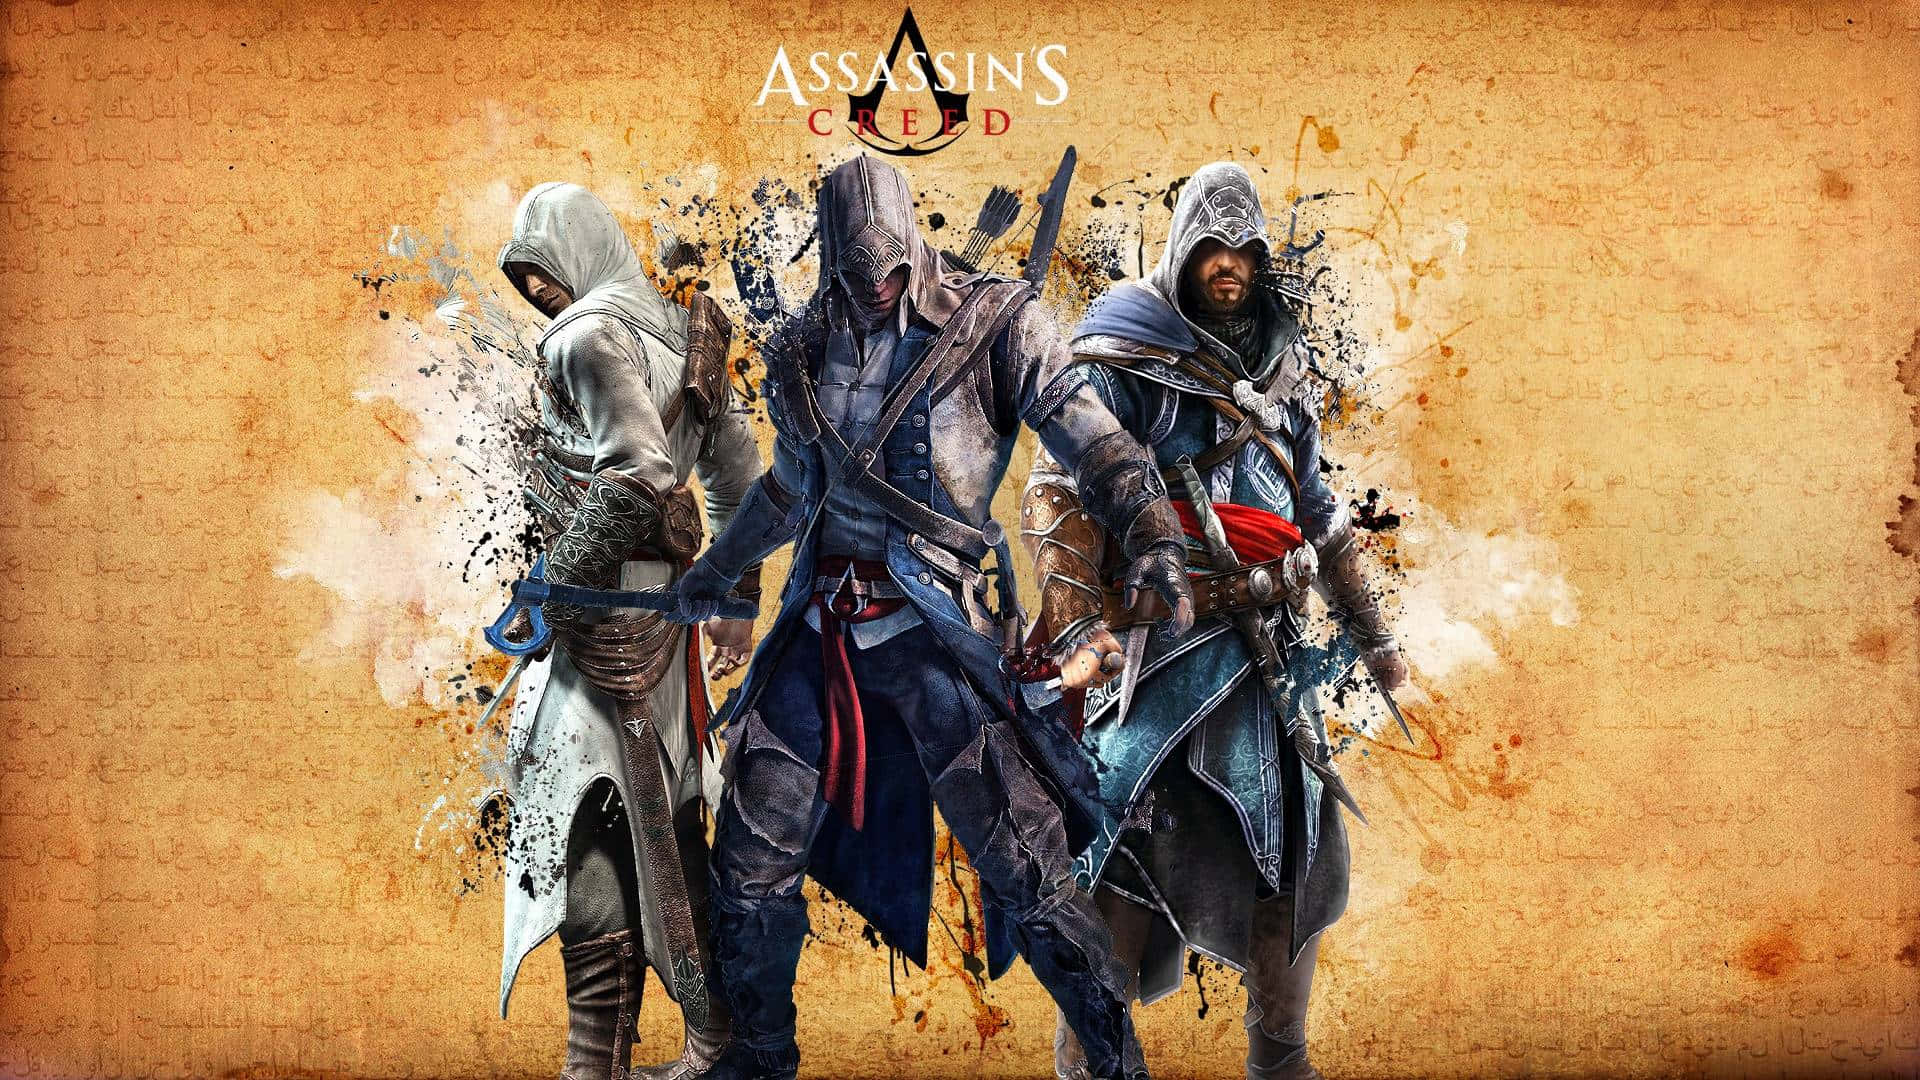 Hdvideospiel Assassin's Creed Wallpaper